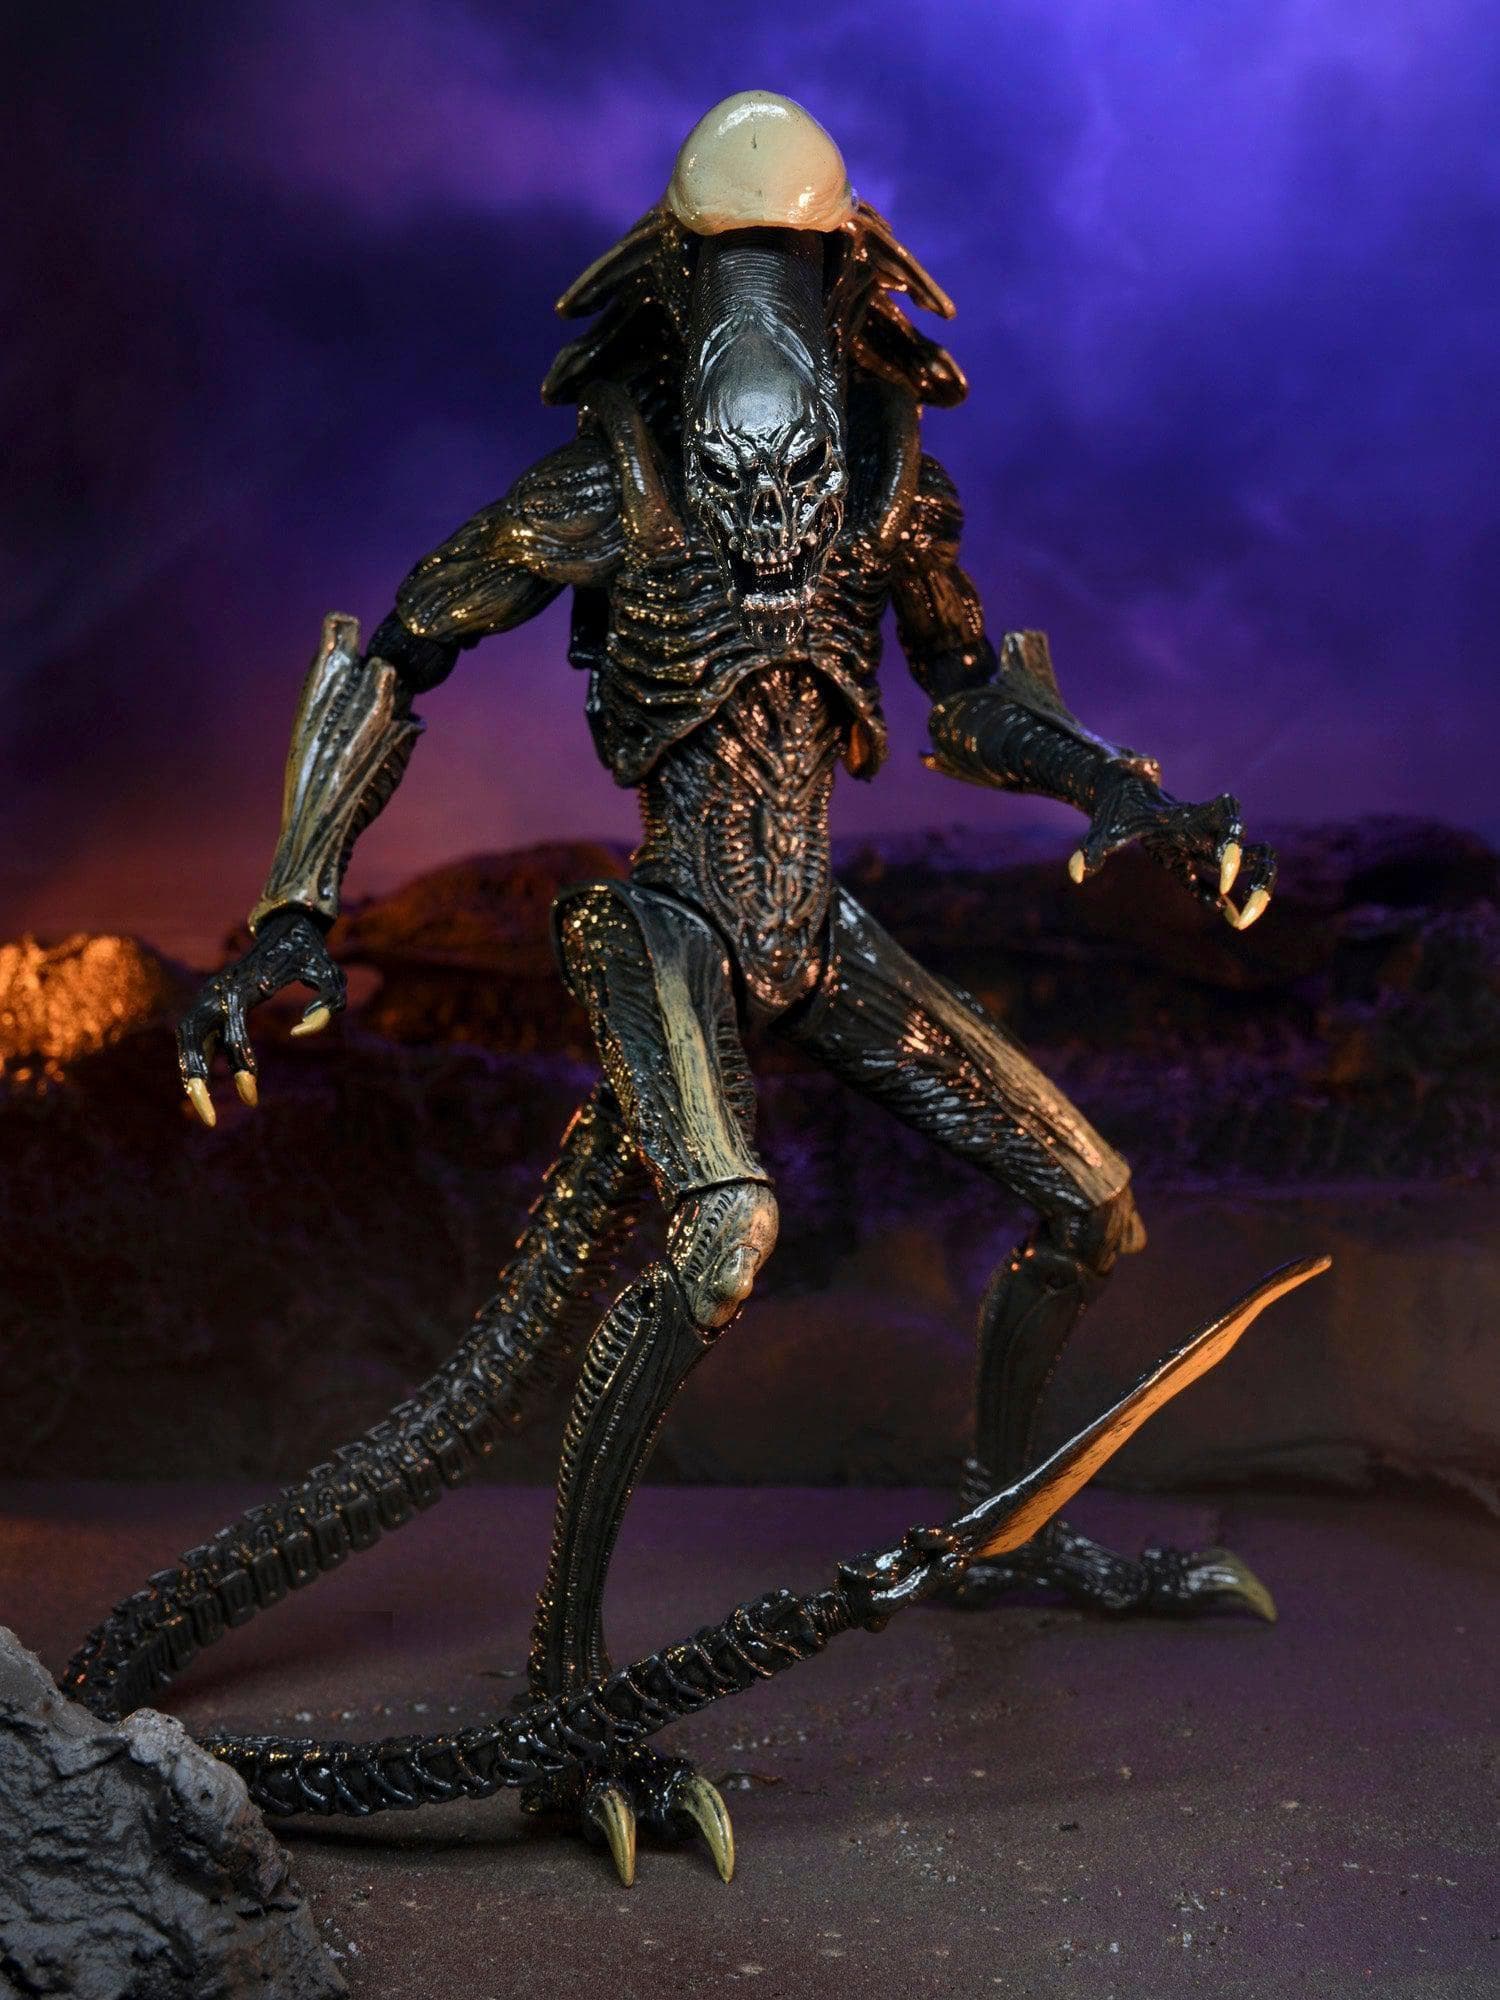 NECA - Alien vs Predator - 7" Scale Action Figure - Chrysalis Alien (Movie Deco) - costumes.com